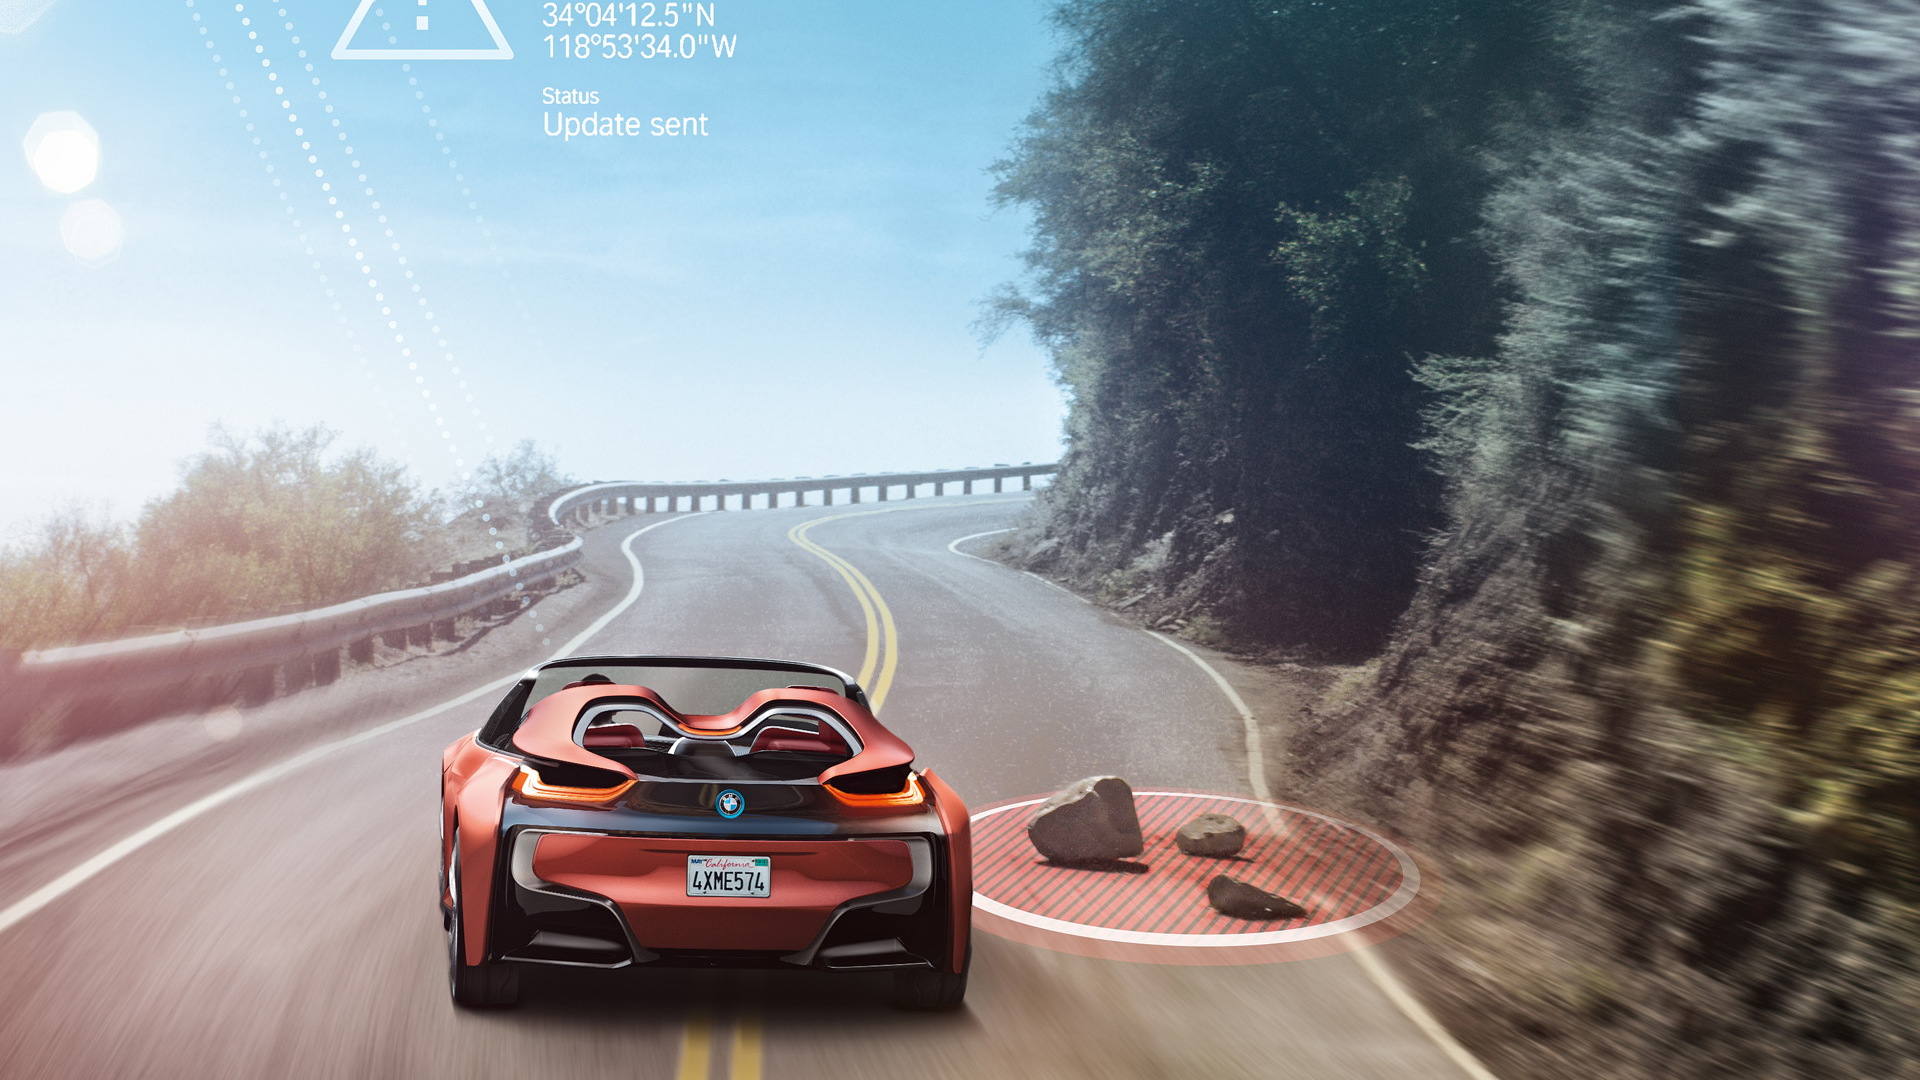 BMW i Future Interaction concept - 2016 Consumer Electronics Show